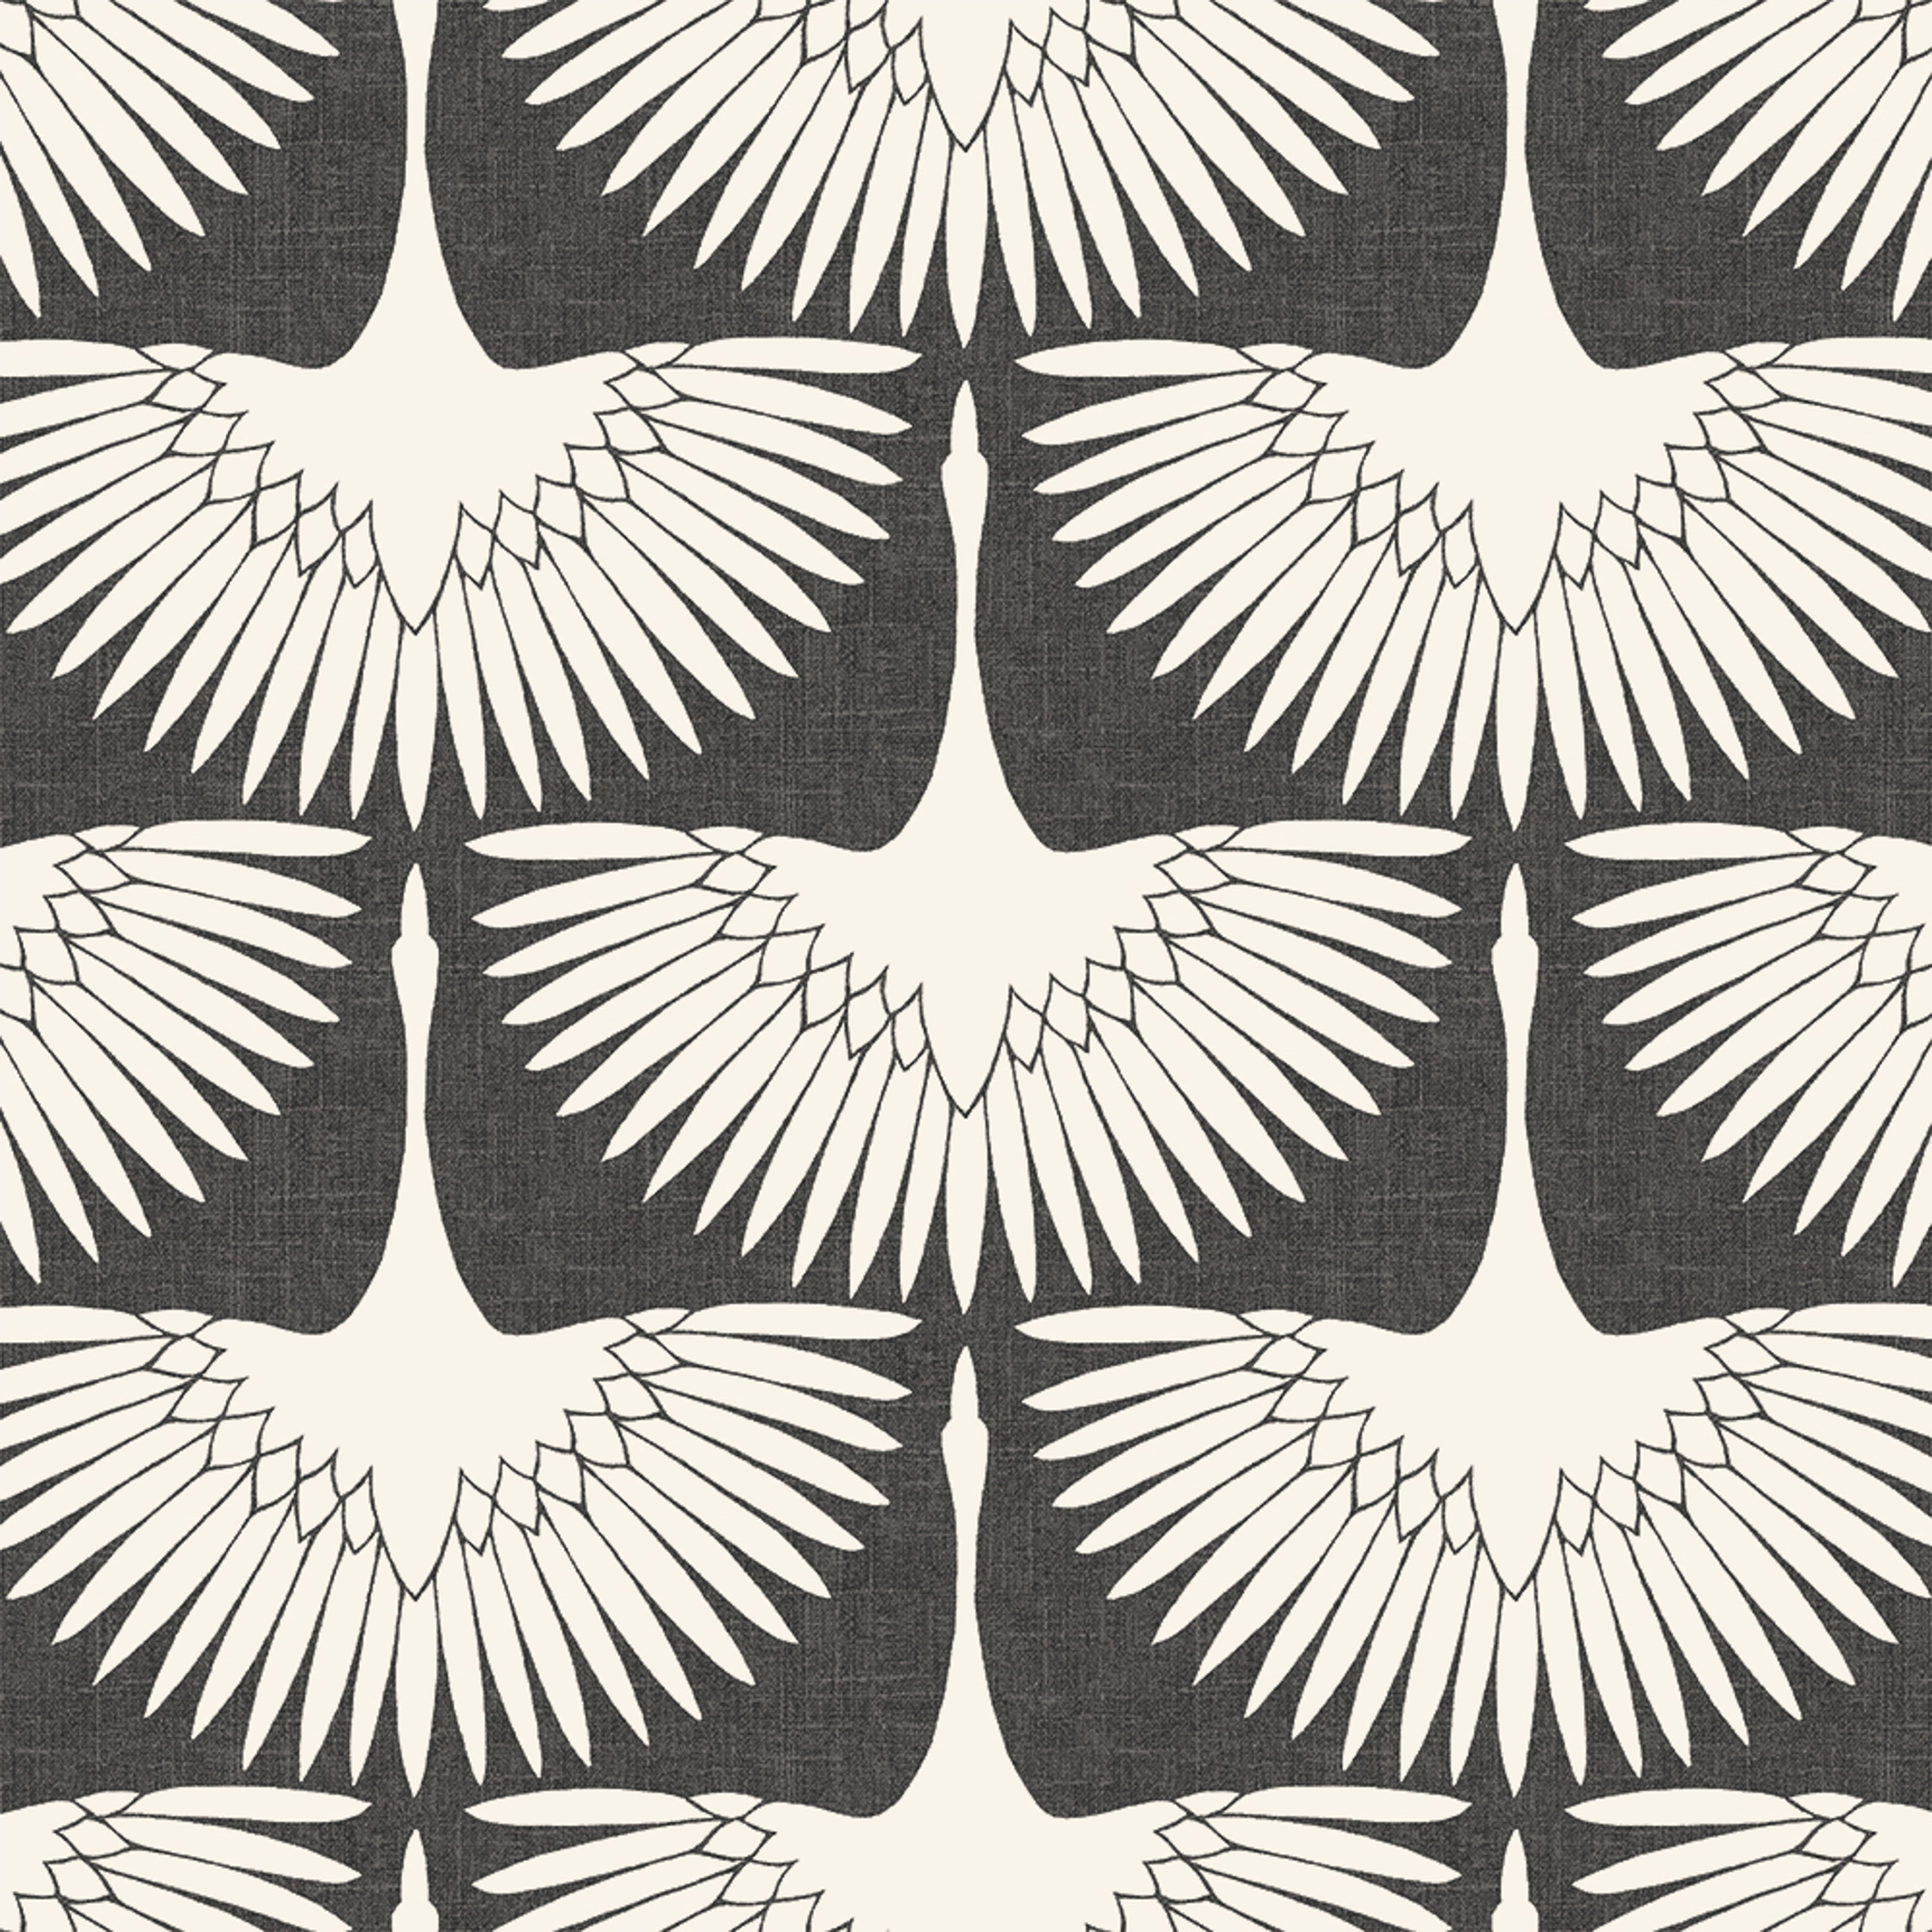 Genevieve Gorder Cranes Peel And Stick Wallpaper